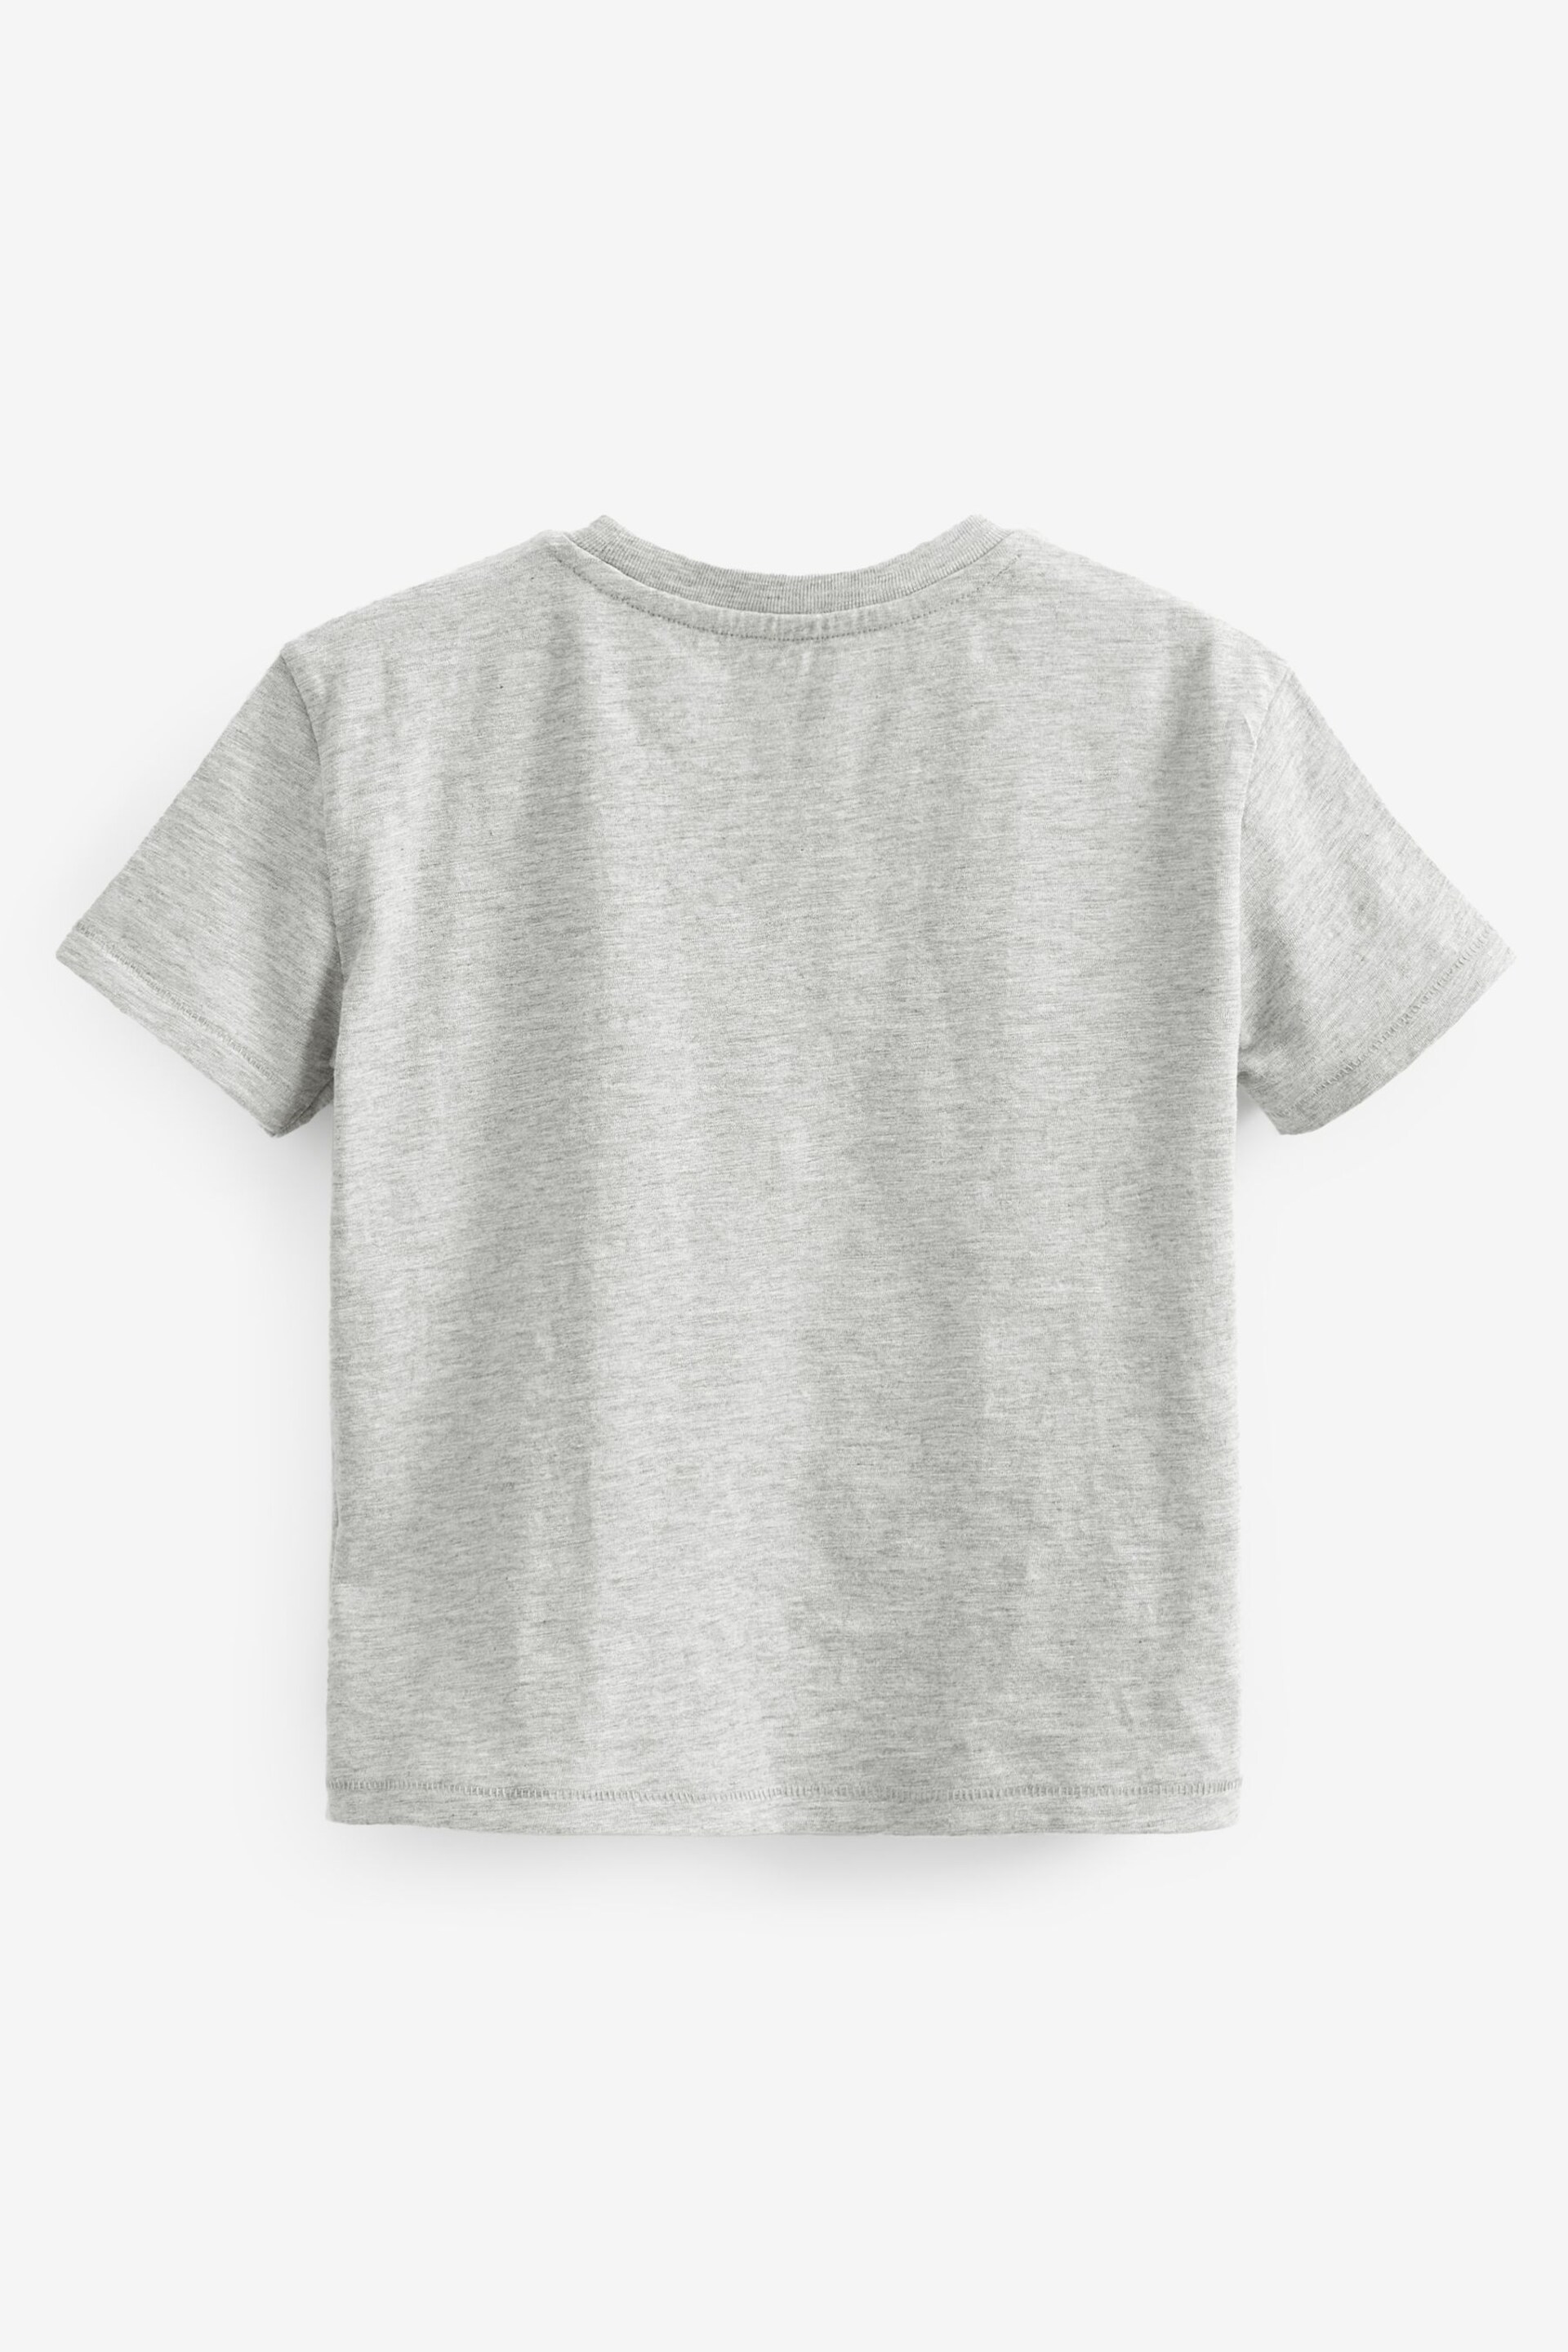 Gap Grey Pocket Short Sleeve Crew Neck T-Shirt (4-13yrs) - Image 2 of 3